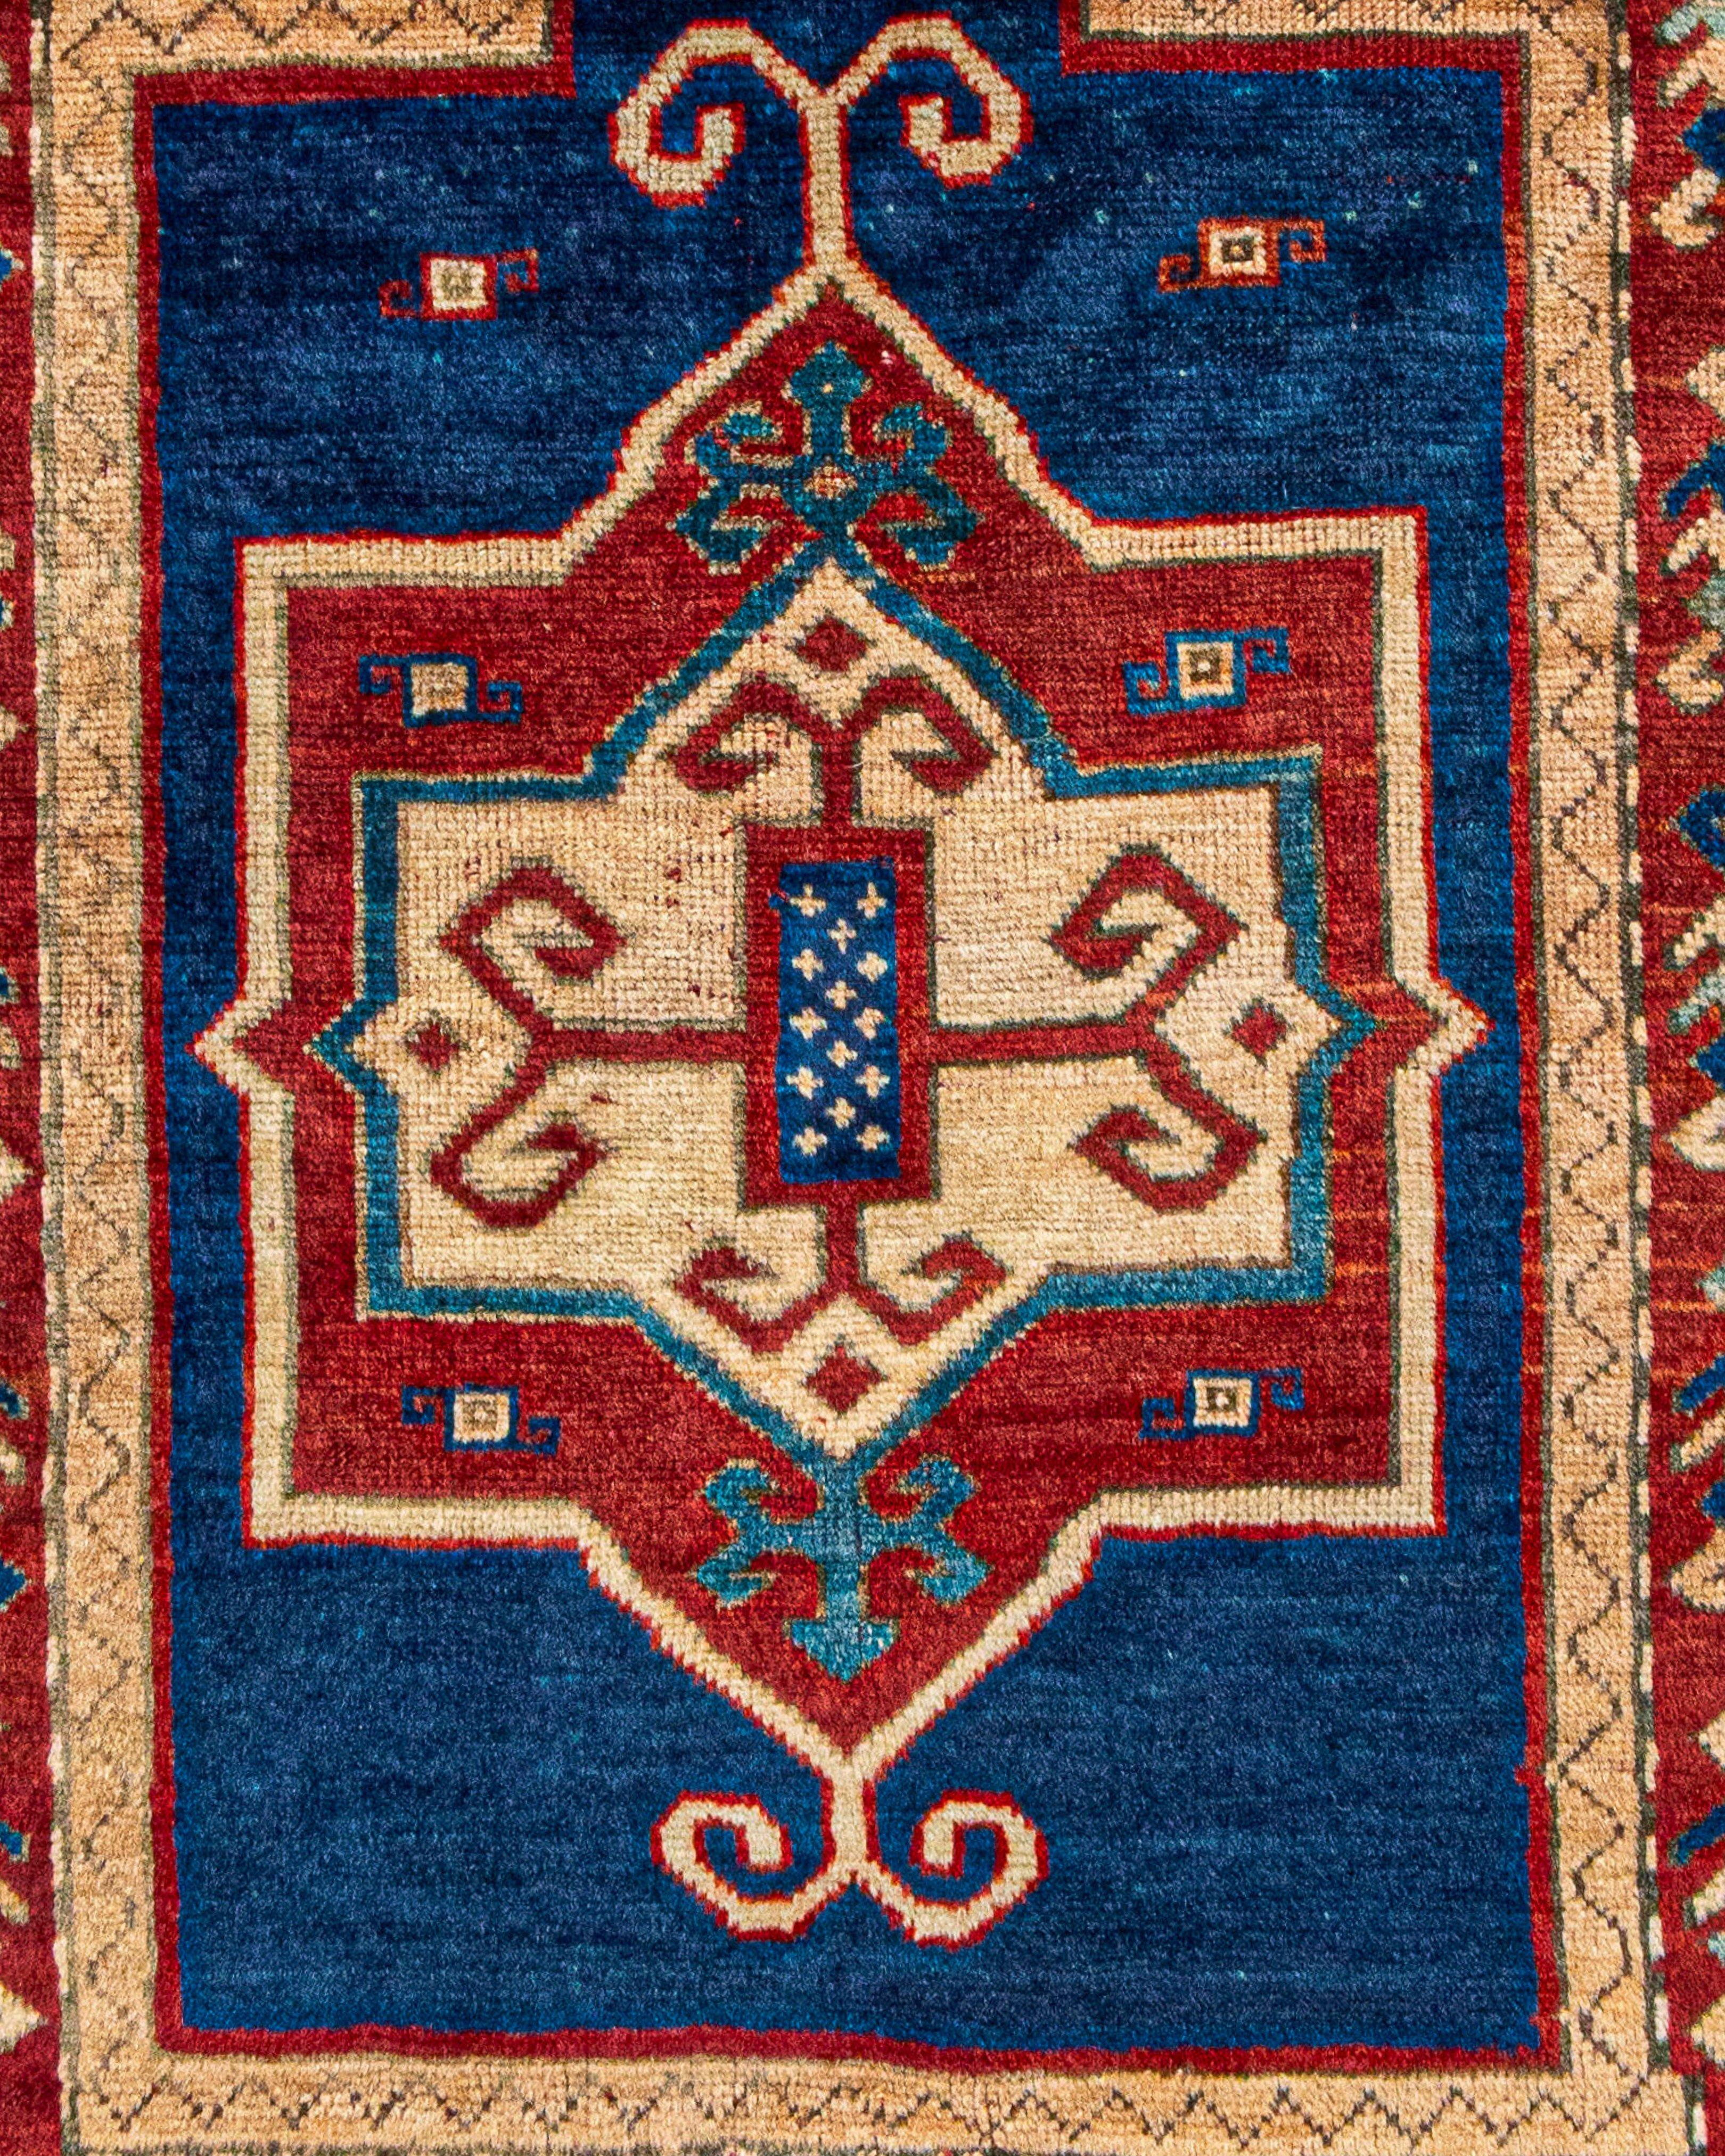 Antique Caucasian Fachralo Kazak Rug, 19th Century

Additional Information:
Dimensions: 3'7